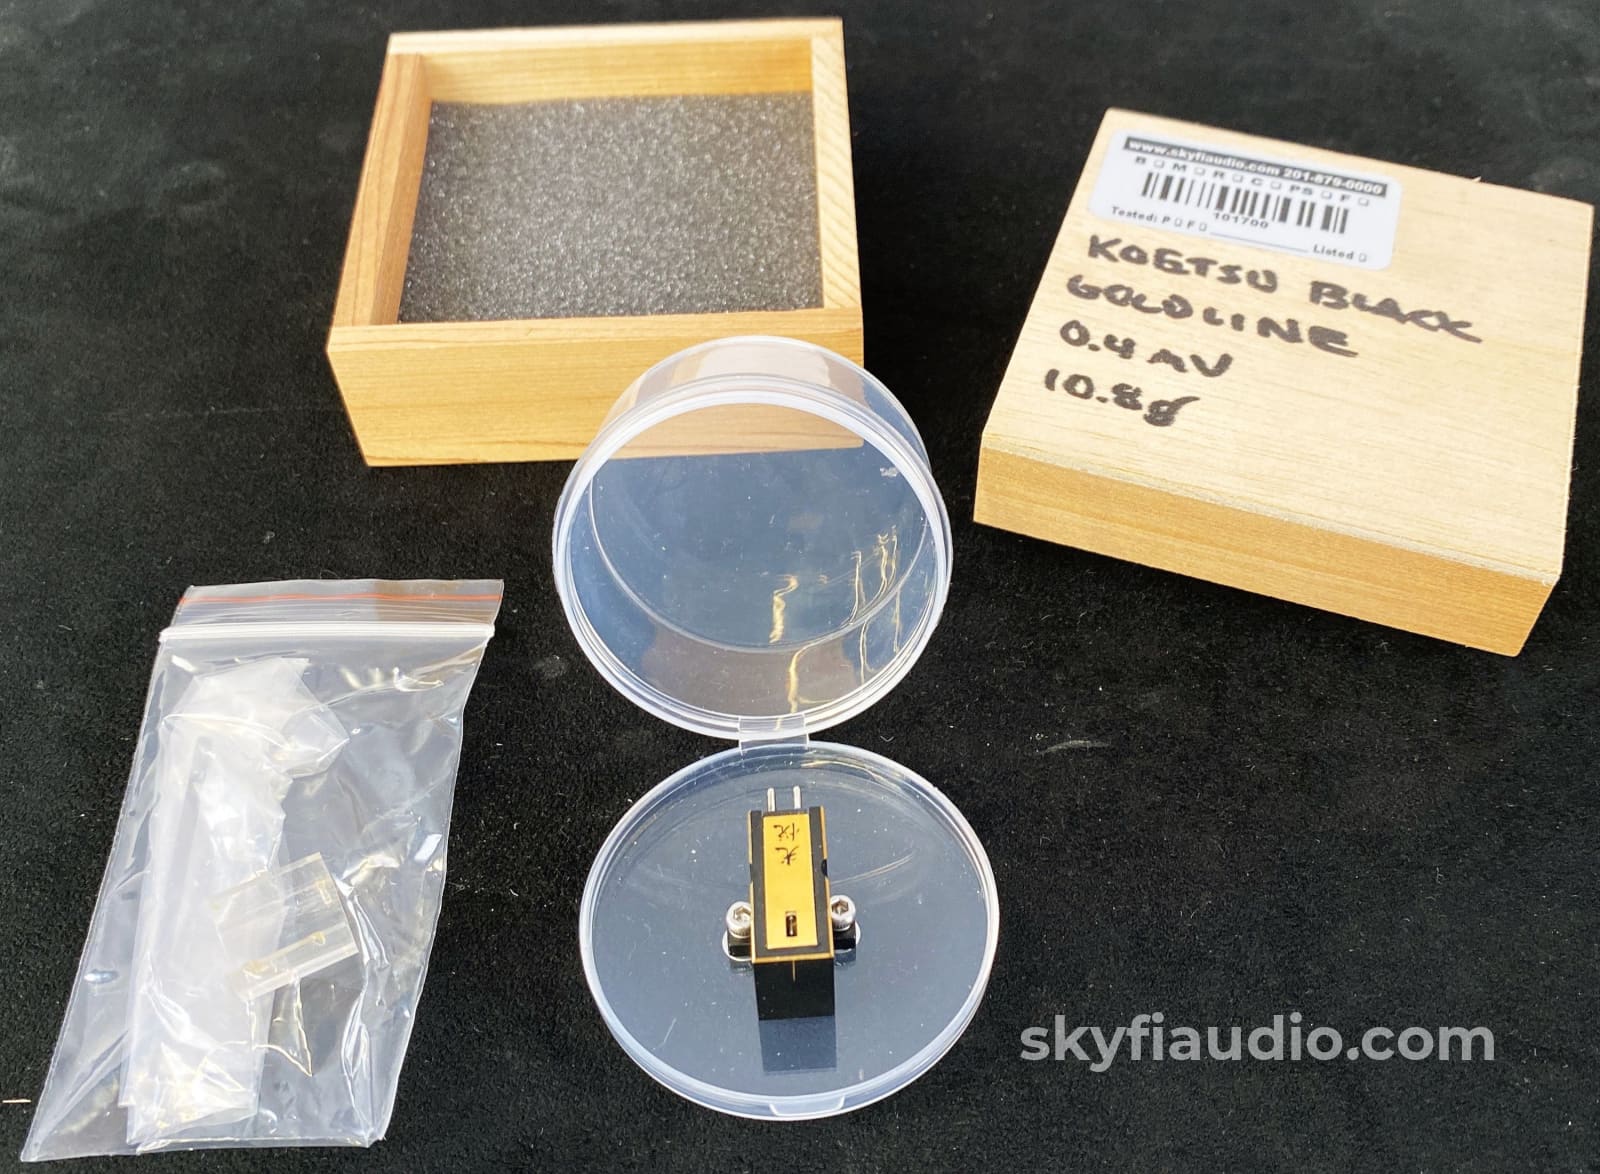 Koetsu Black Goldline Low Output Mc (Moving Coil) Phono Cartridge - Handmade In Japan